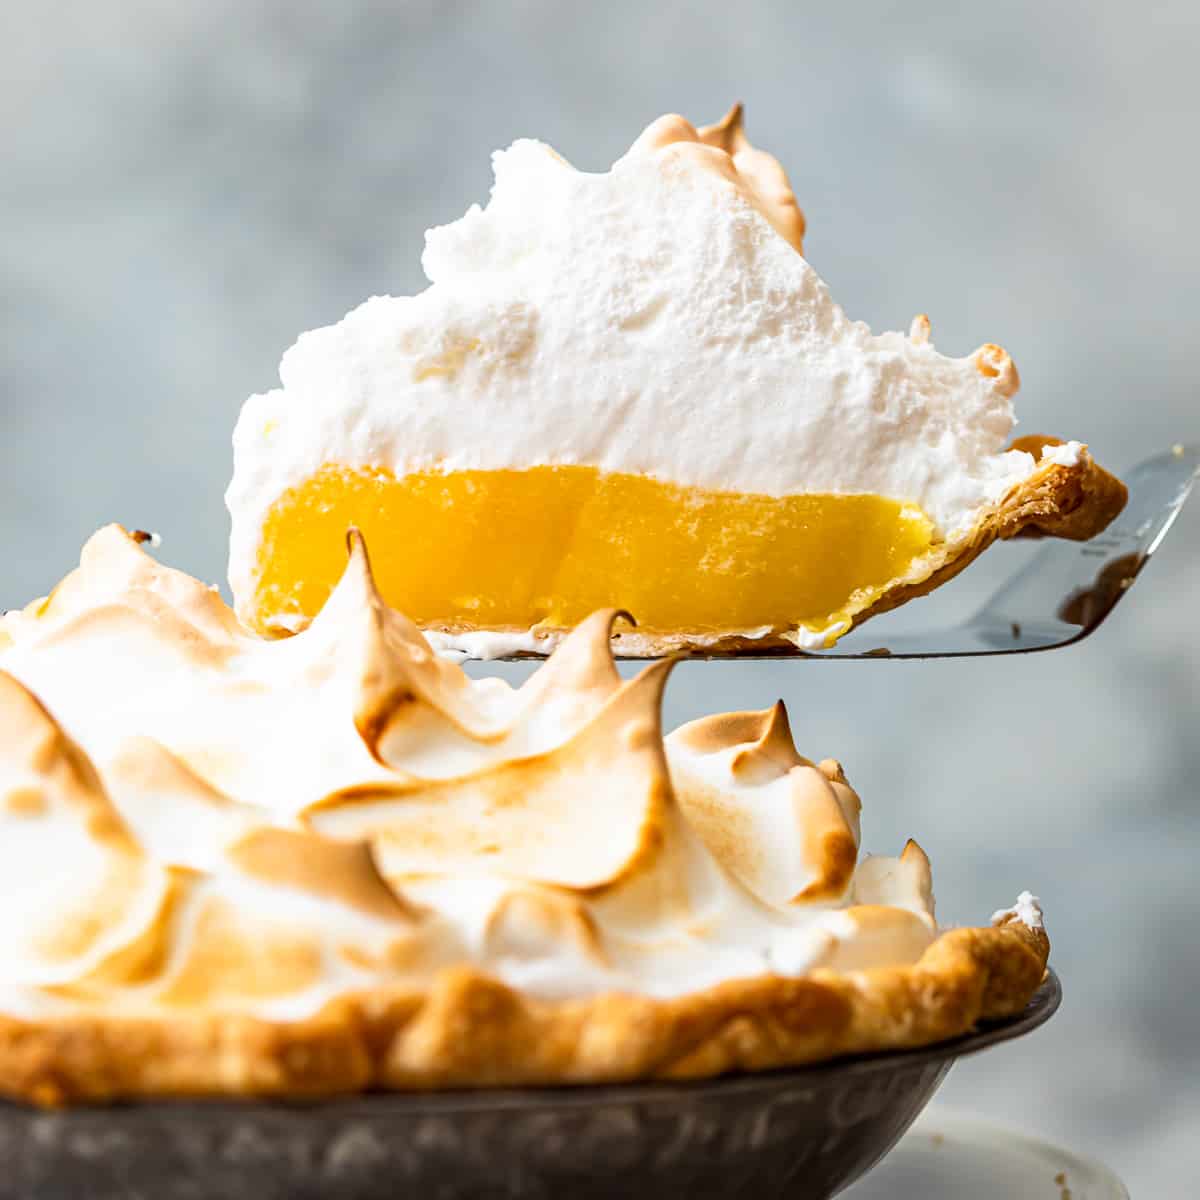 https://www.thecookierookie.com/wp-content/uploads/2021/03/featured-lemon-meringue-pie-recipe.jpg